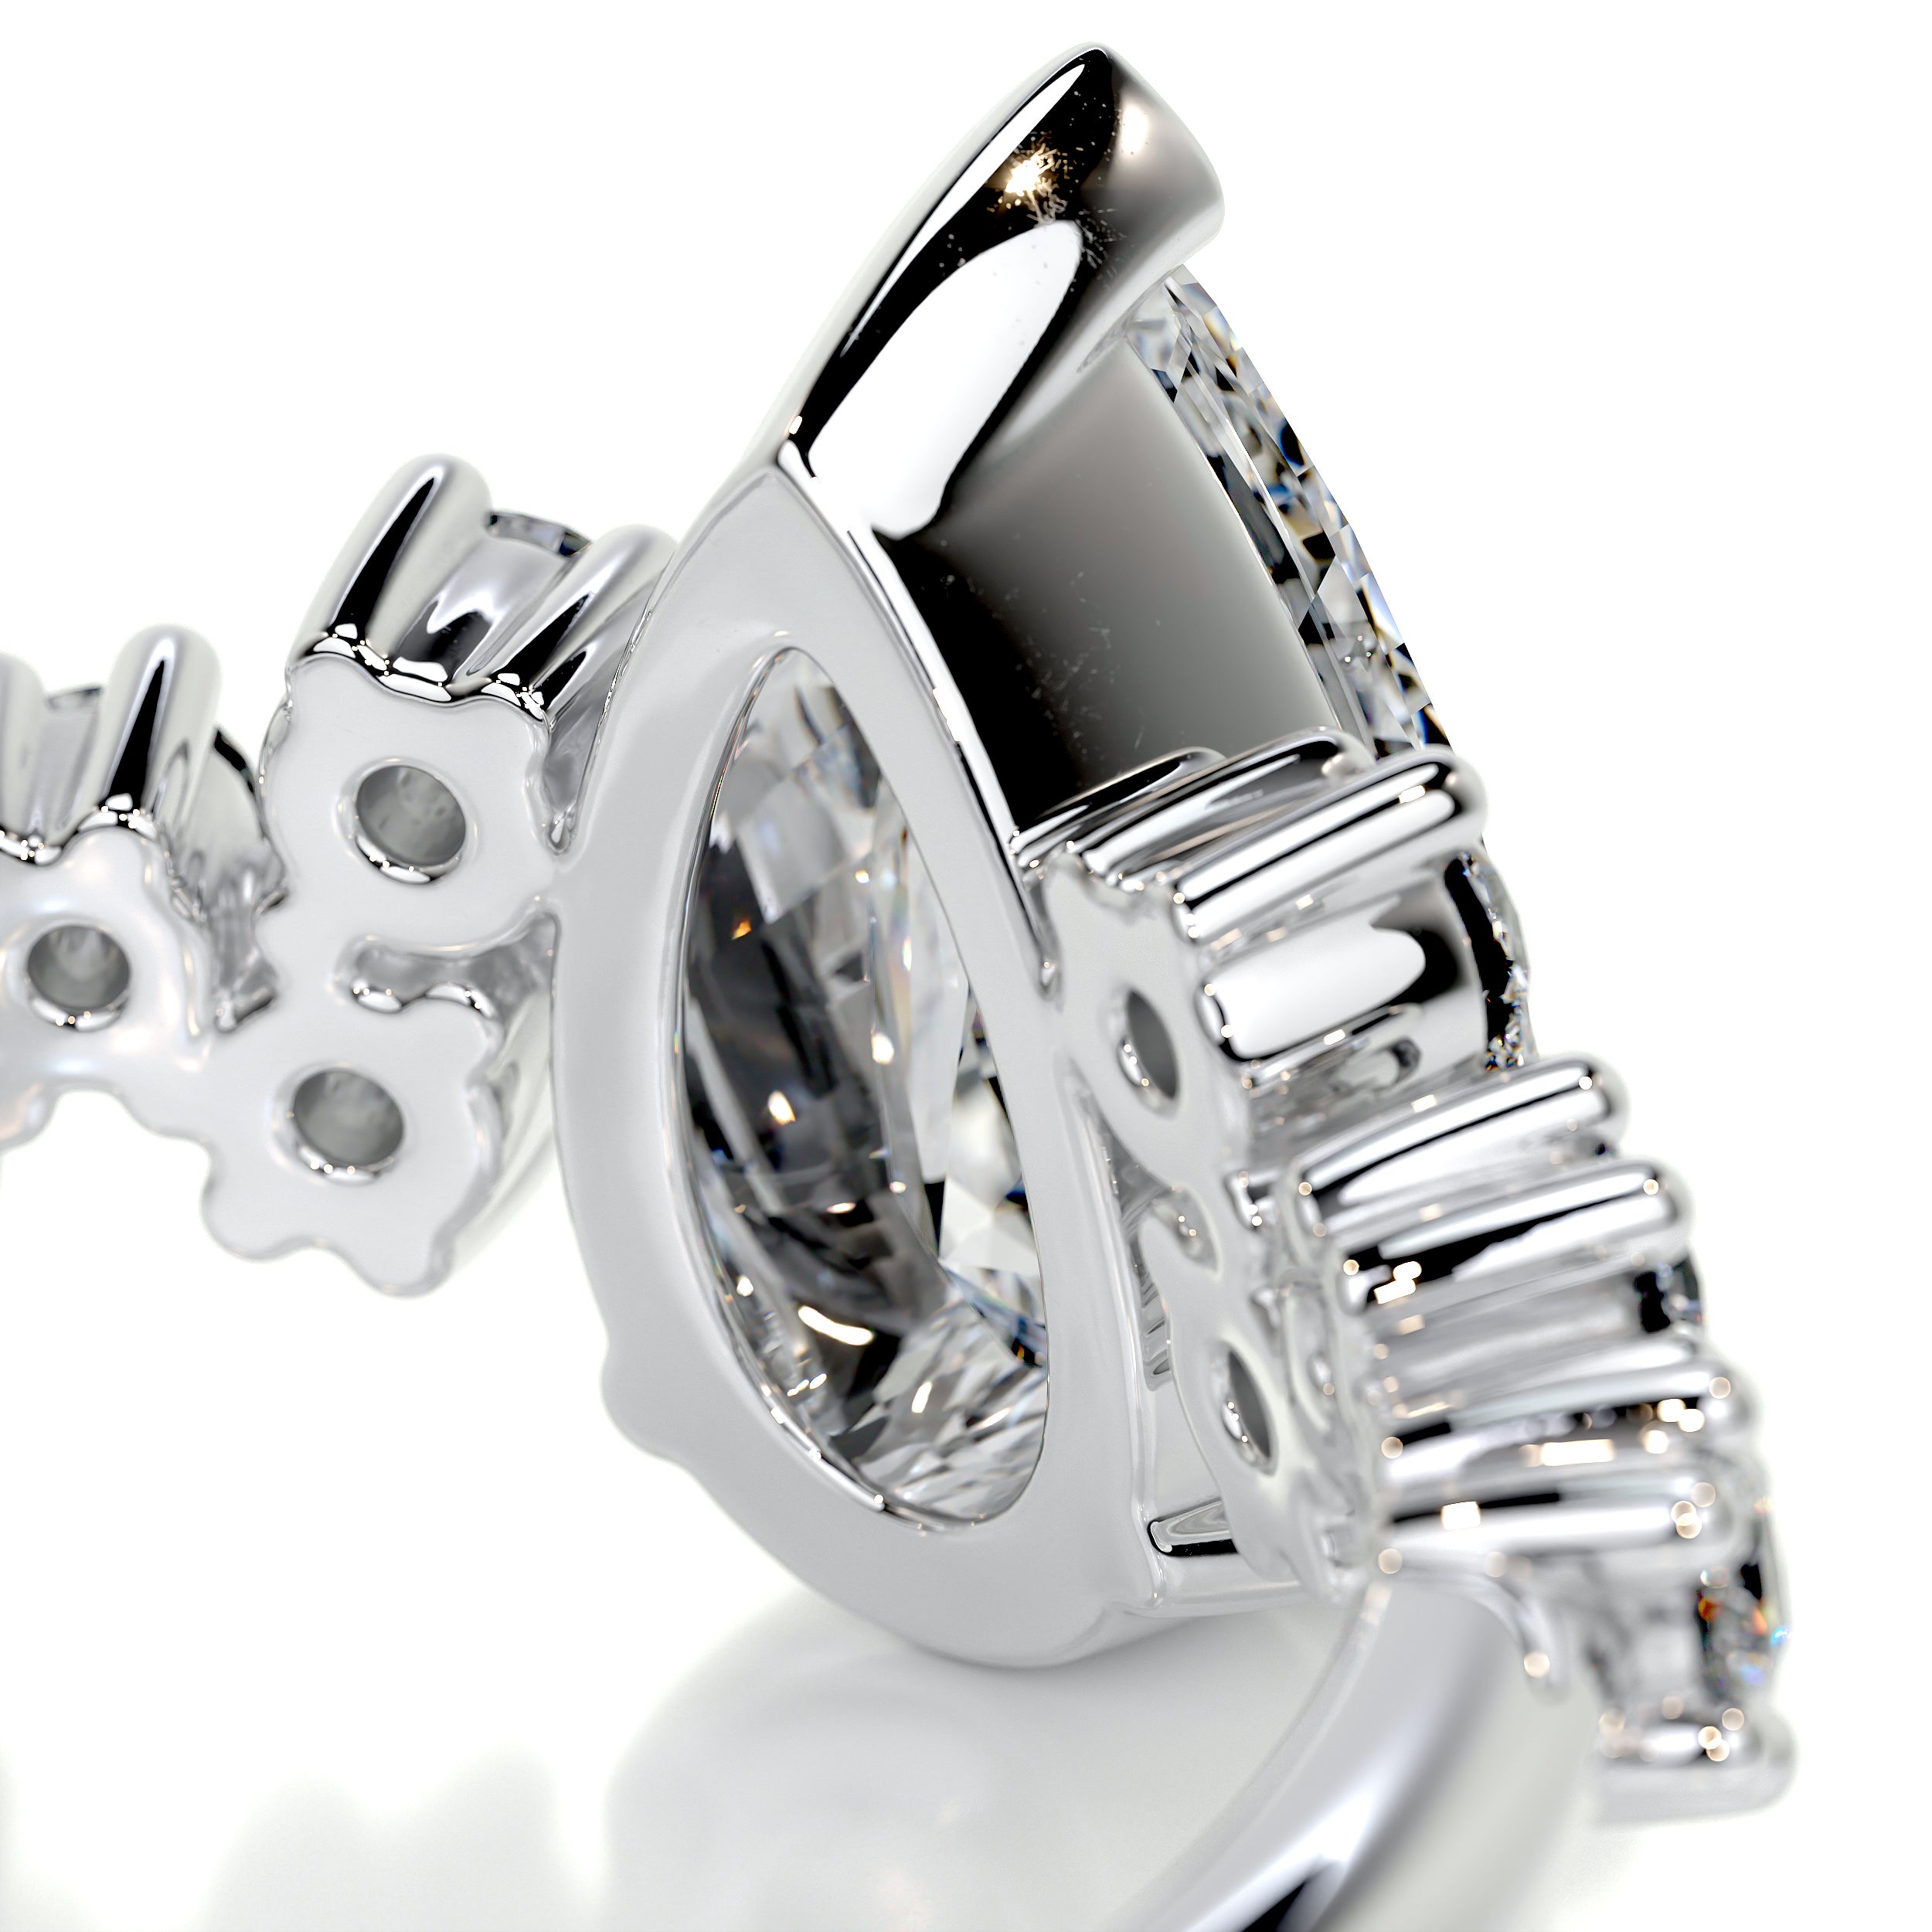 Mabel Diamond Engagement Ring -Platinum